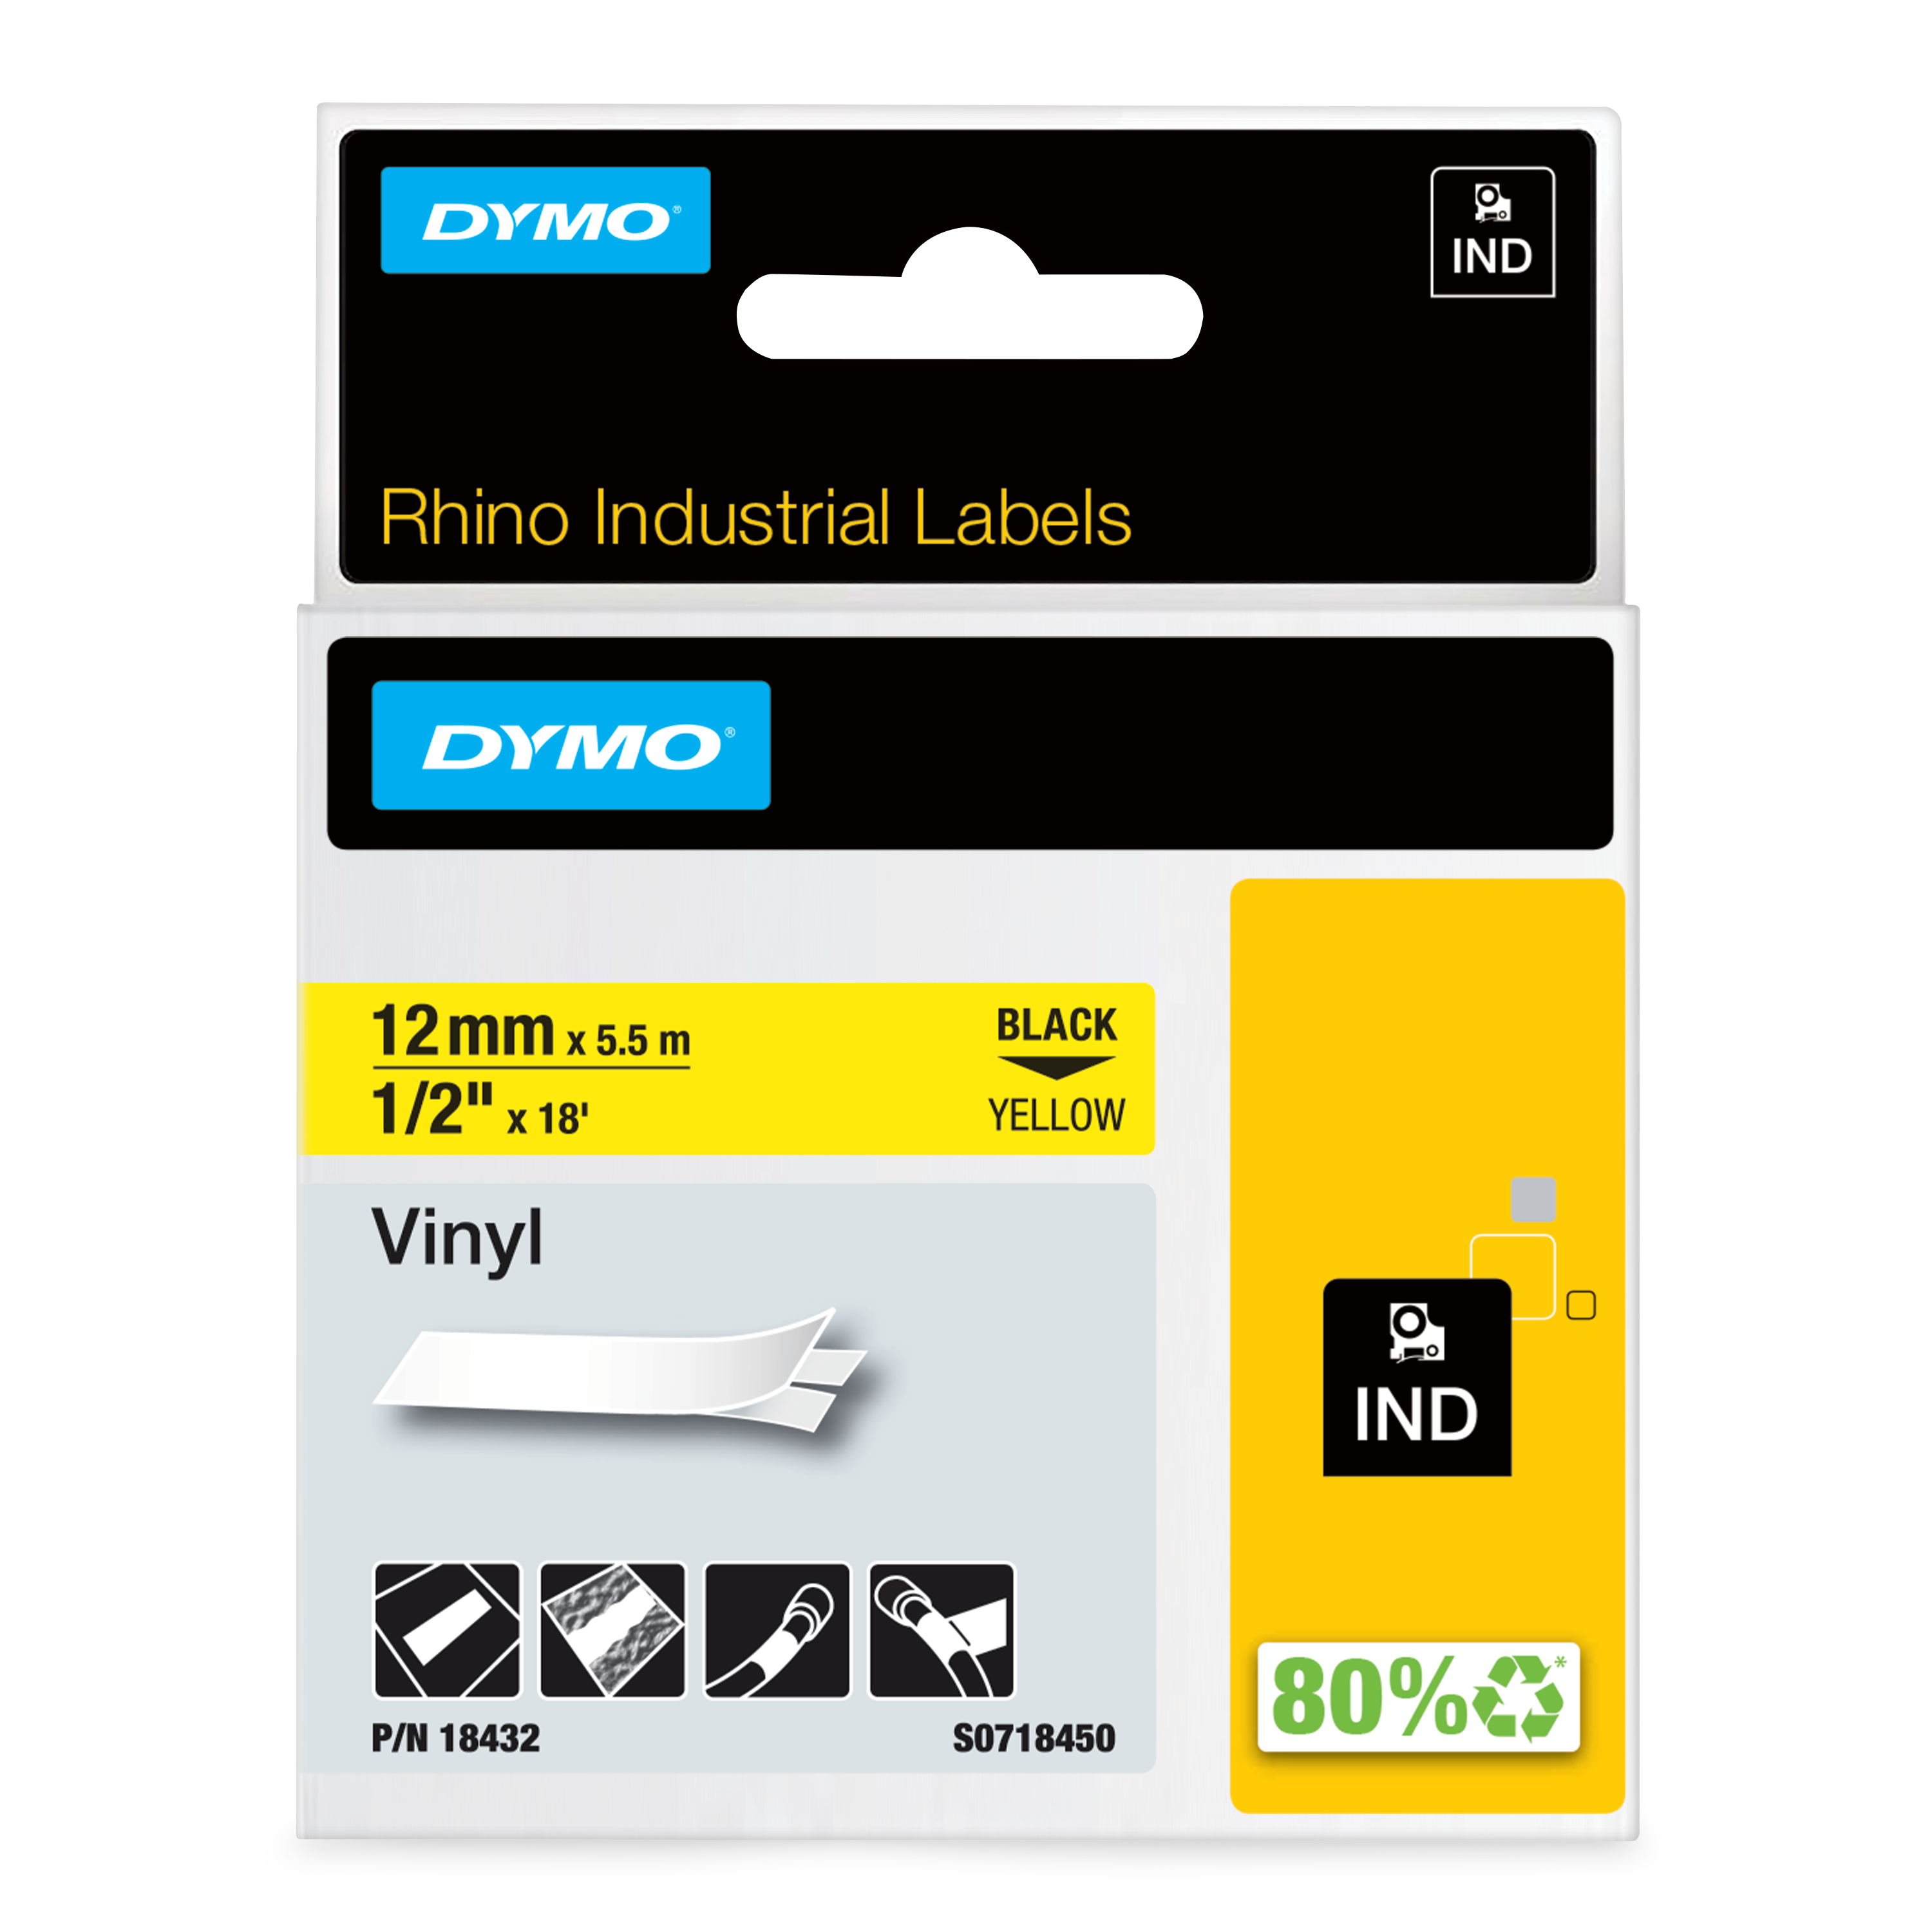 Dymo Black on Yellow Label Printer Tape, 5.5 m Length, 12 mm Width